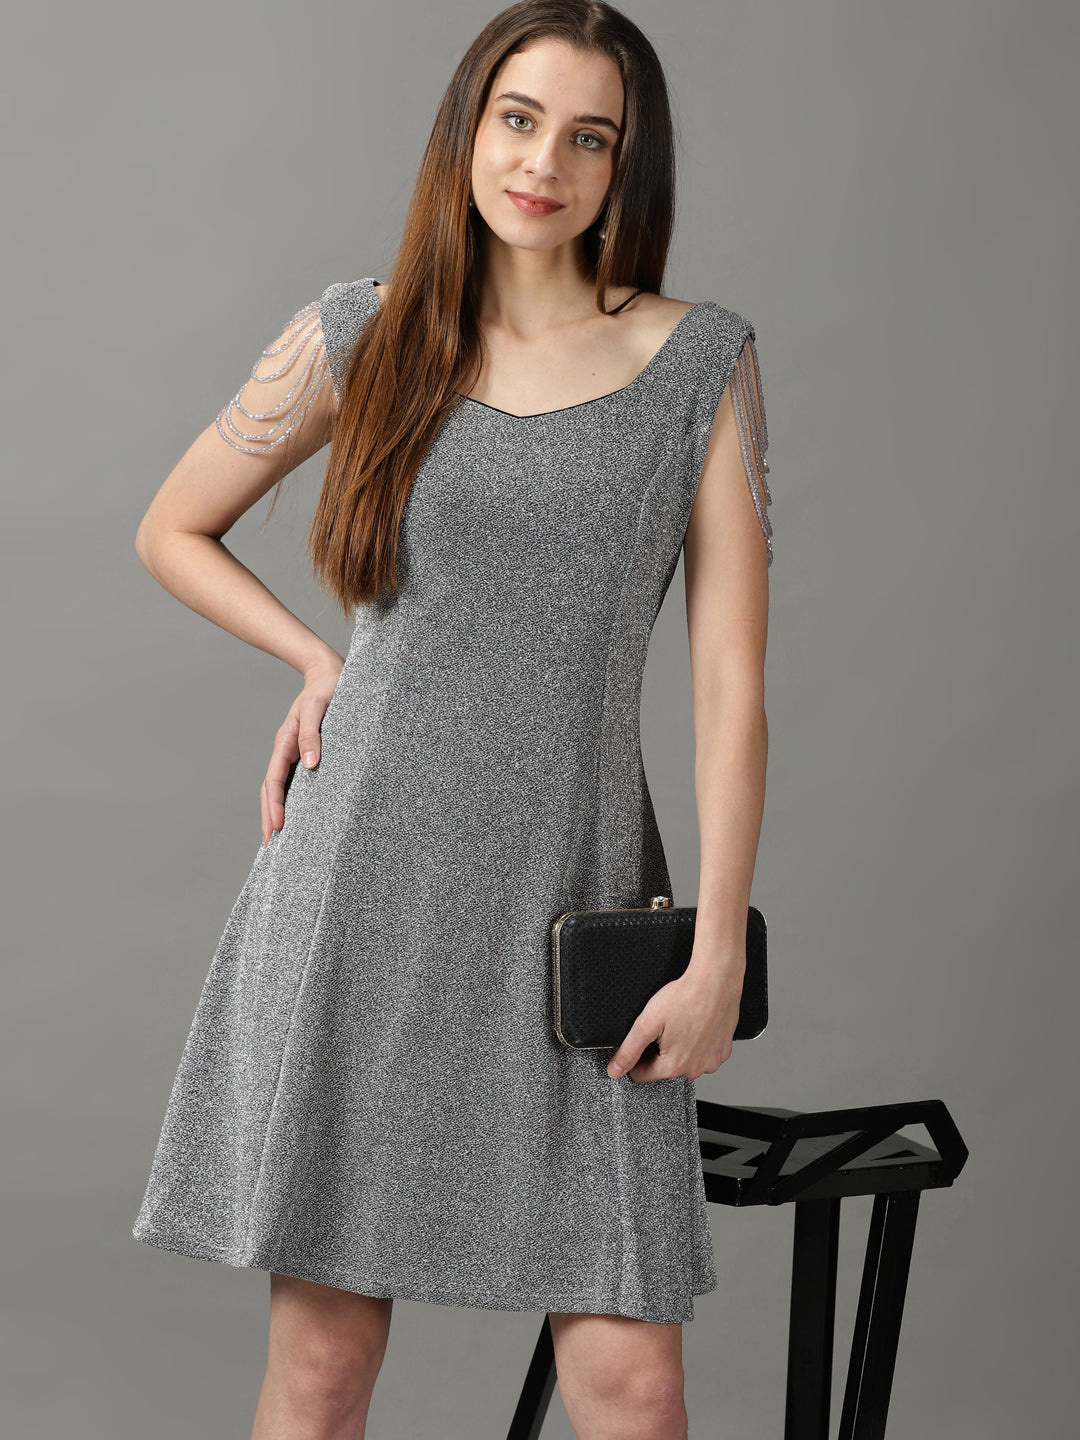 Women's Silver Embellished A-Line Dress